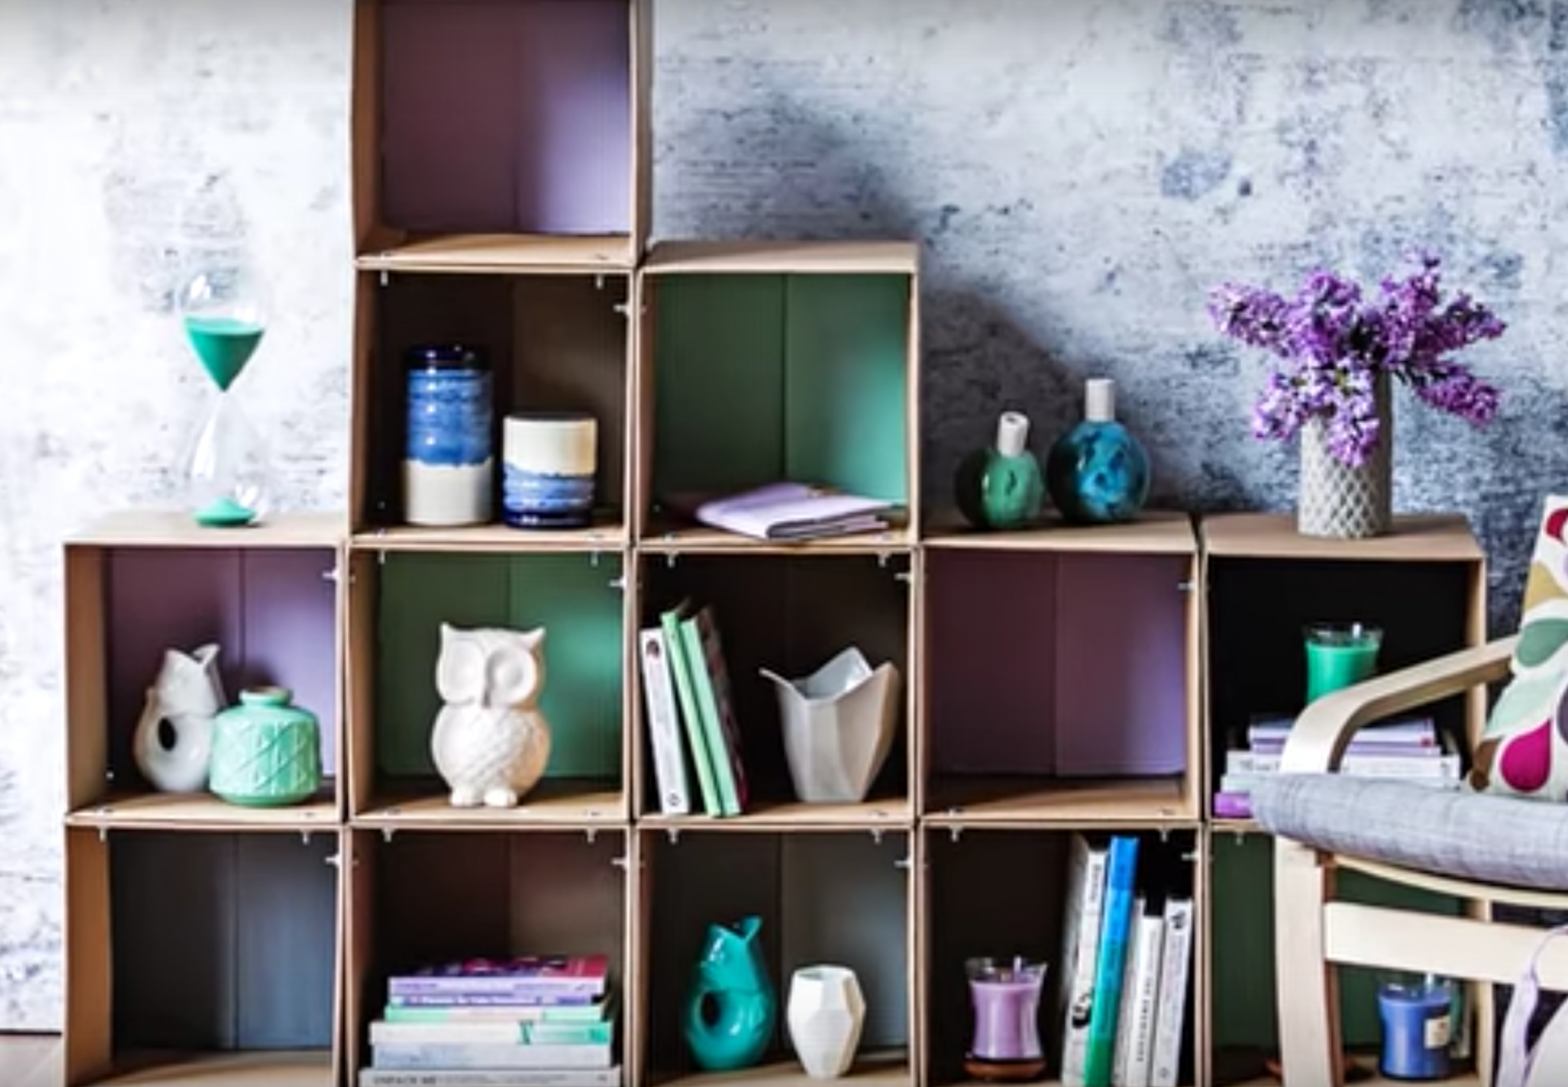 How to Make a BookShelf using Cardboard Boxes – Easy DIY